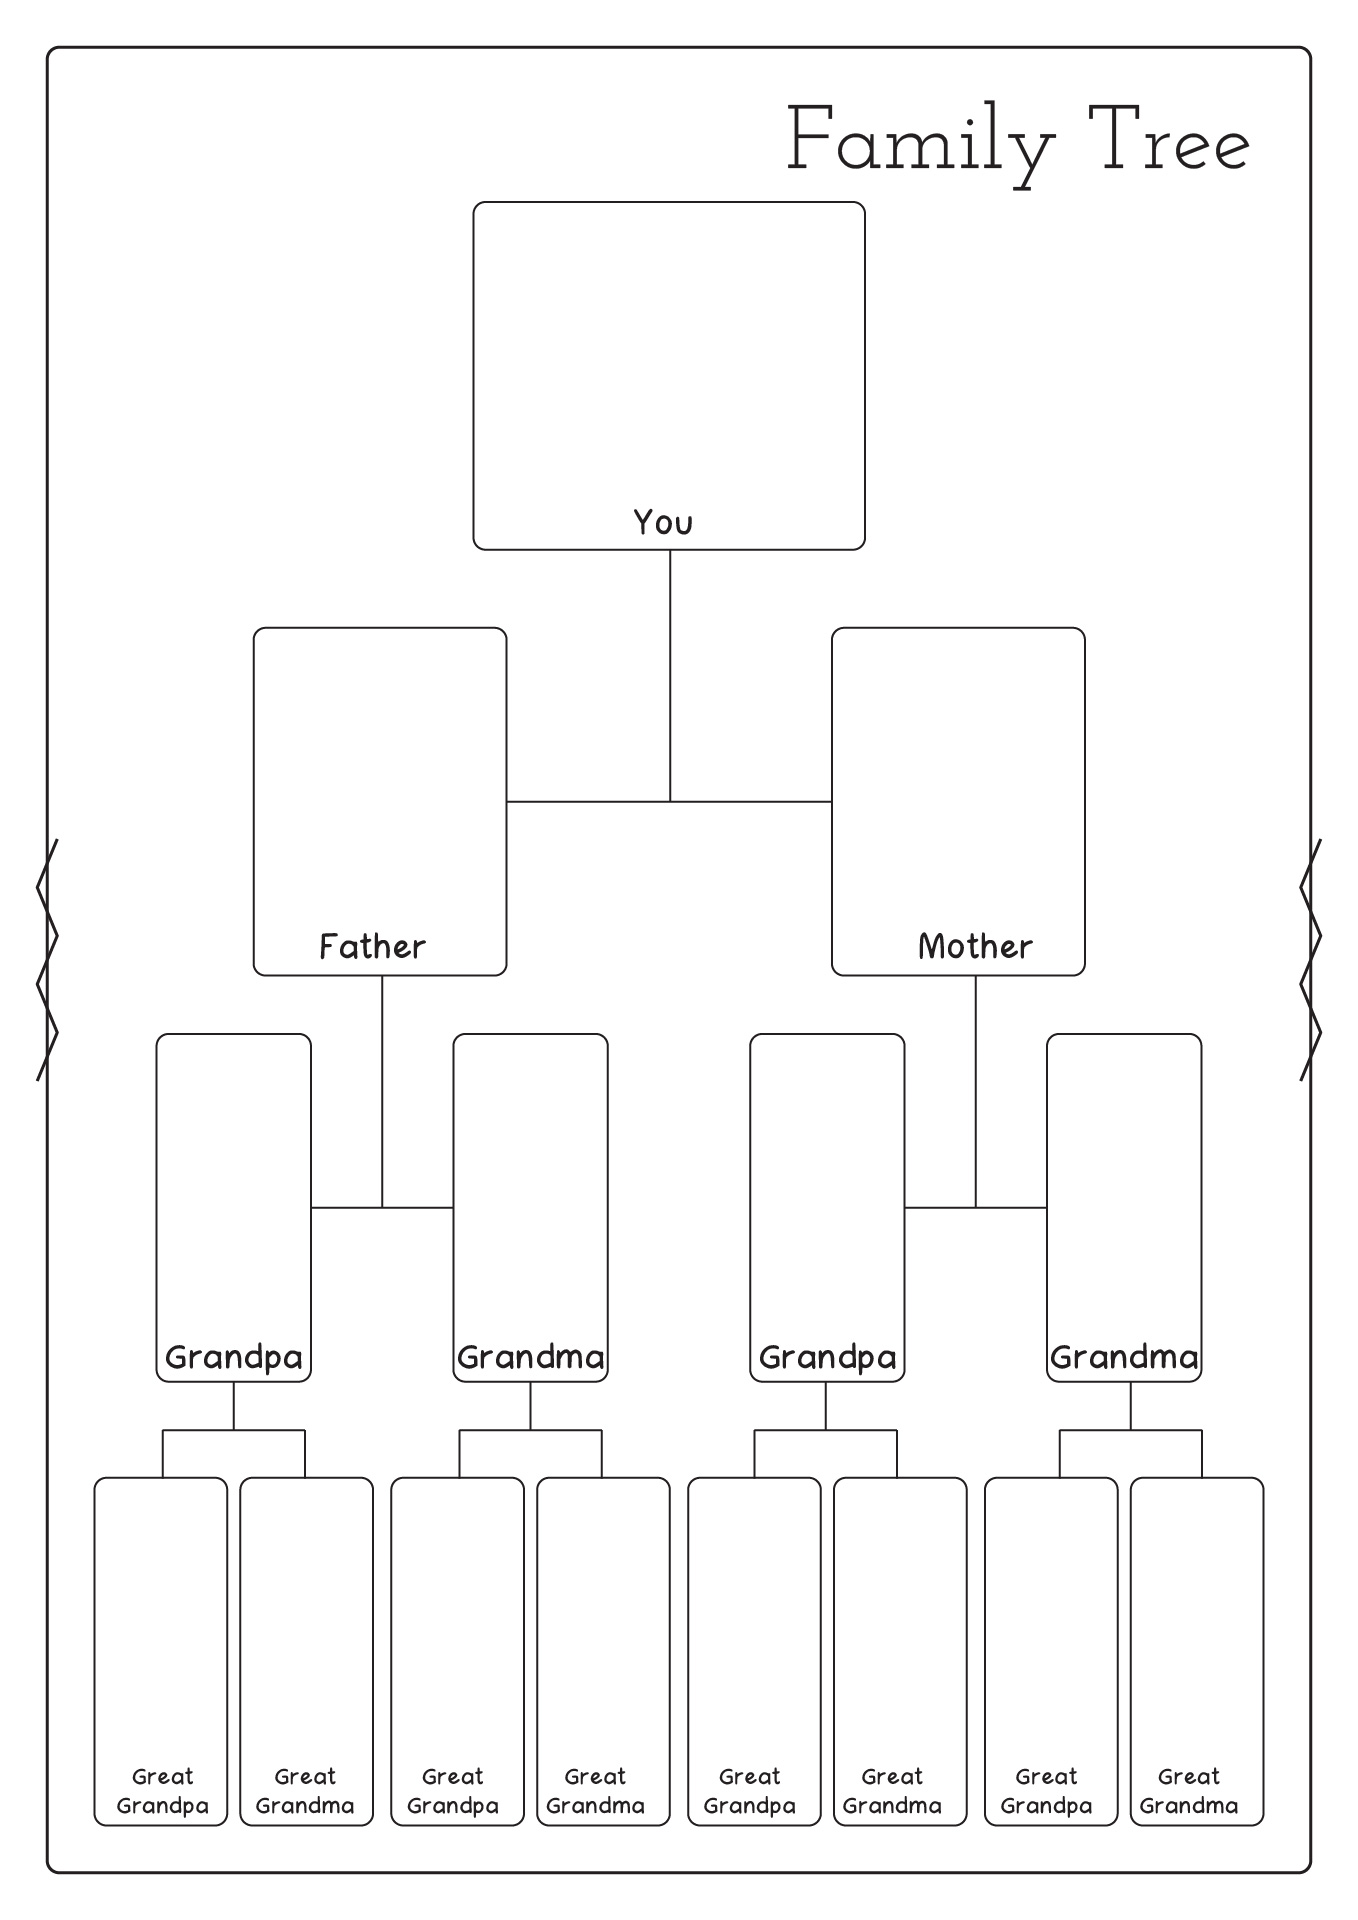 12-best-images-of-family-tree-pedigree-chart-worksheet-6-generation